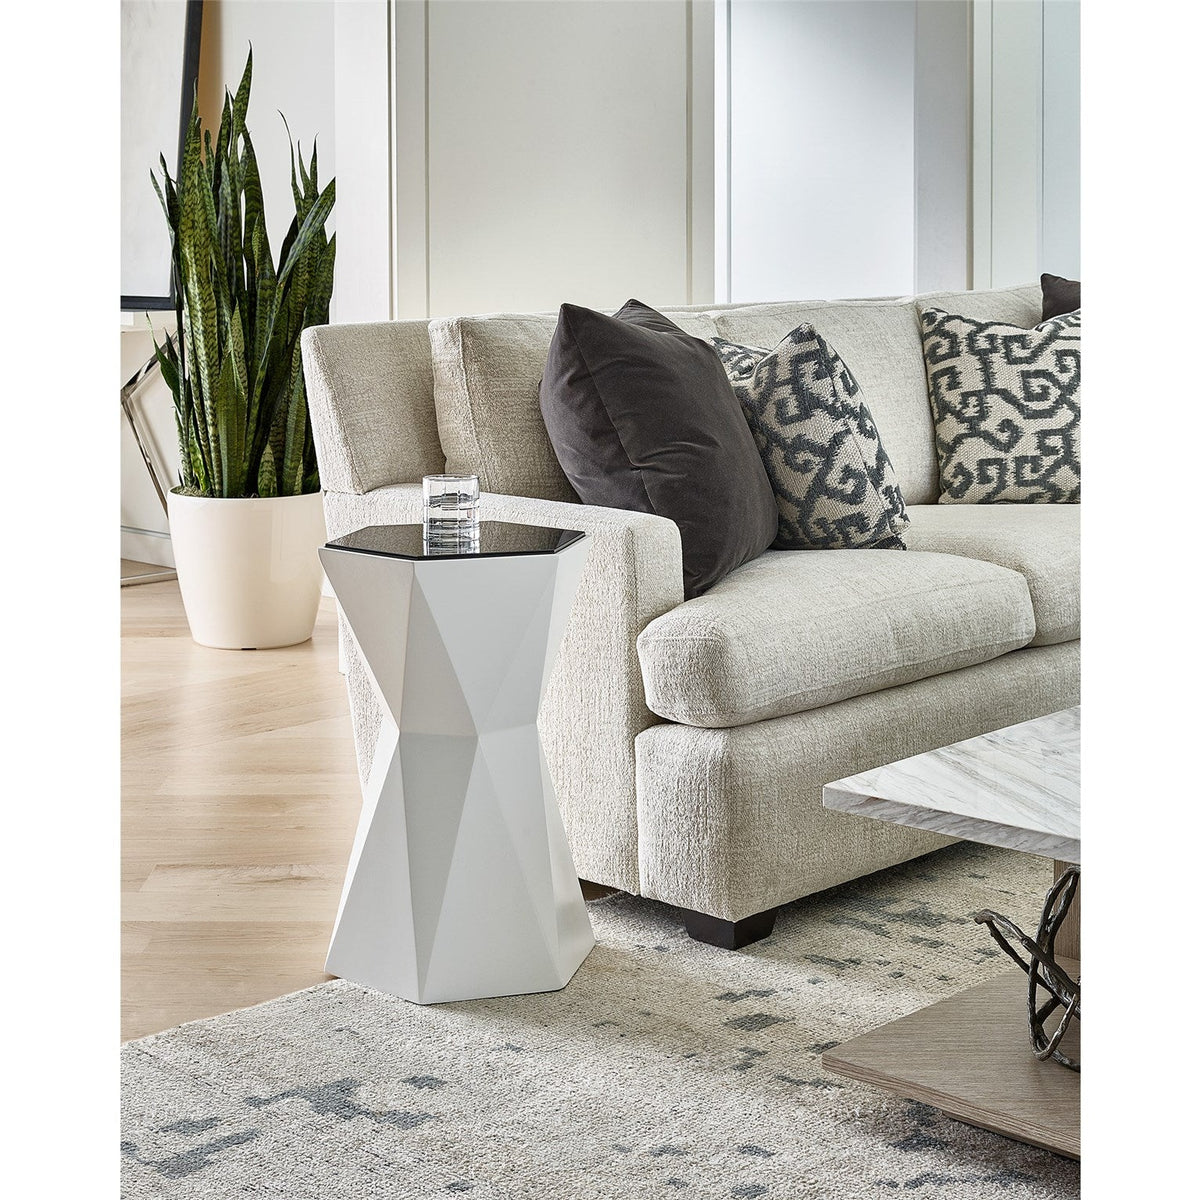 Hexagon Martini Table - Be Bold Furniture